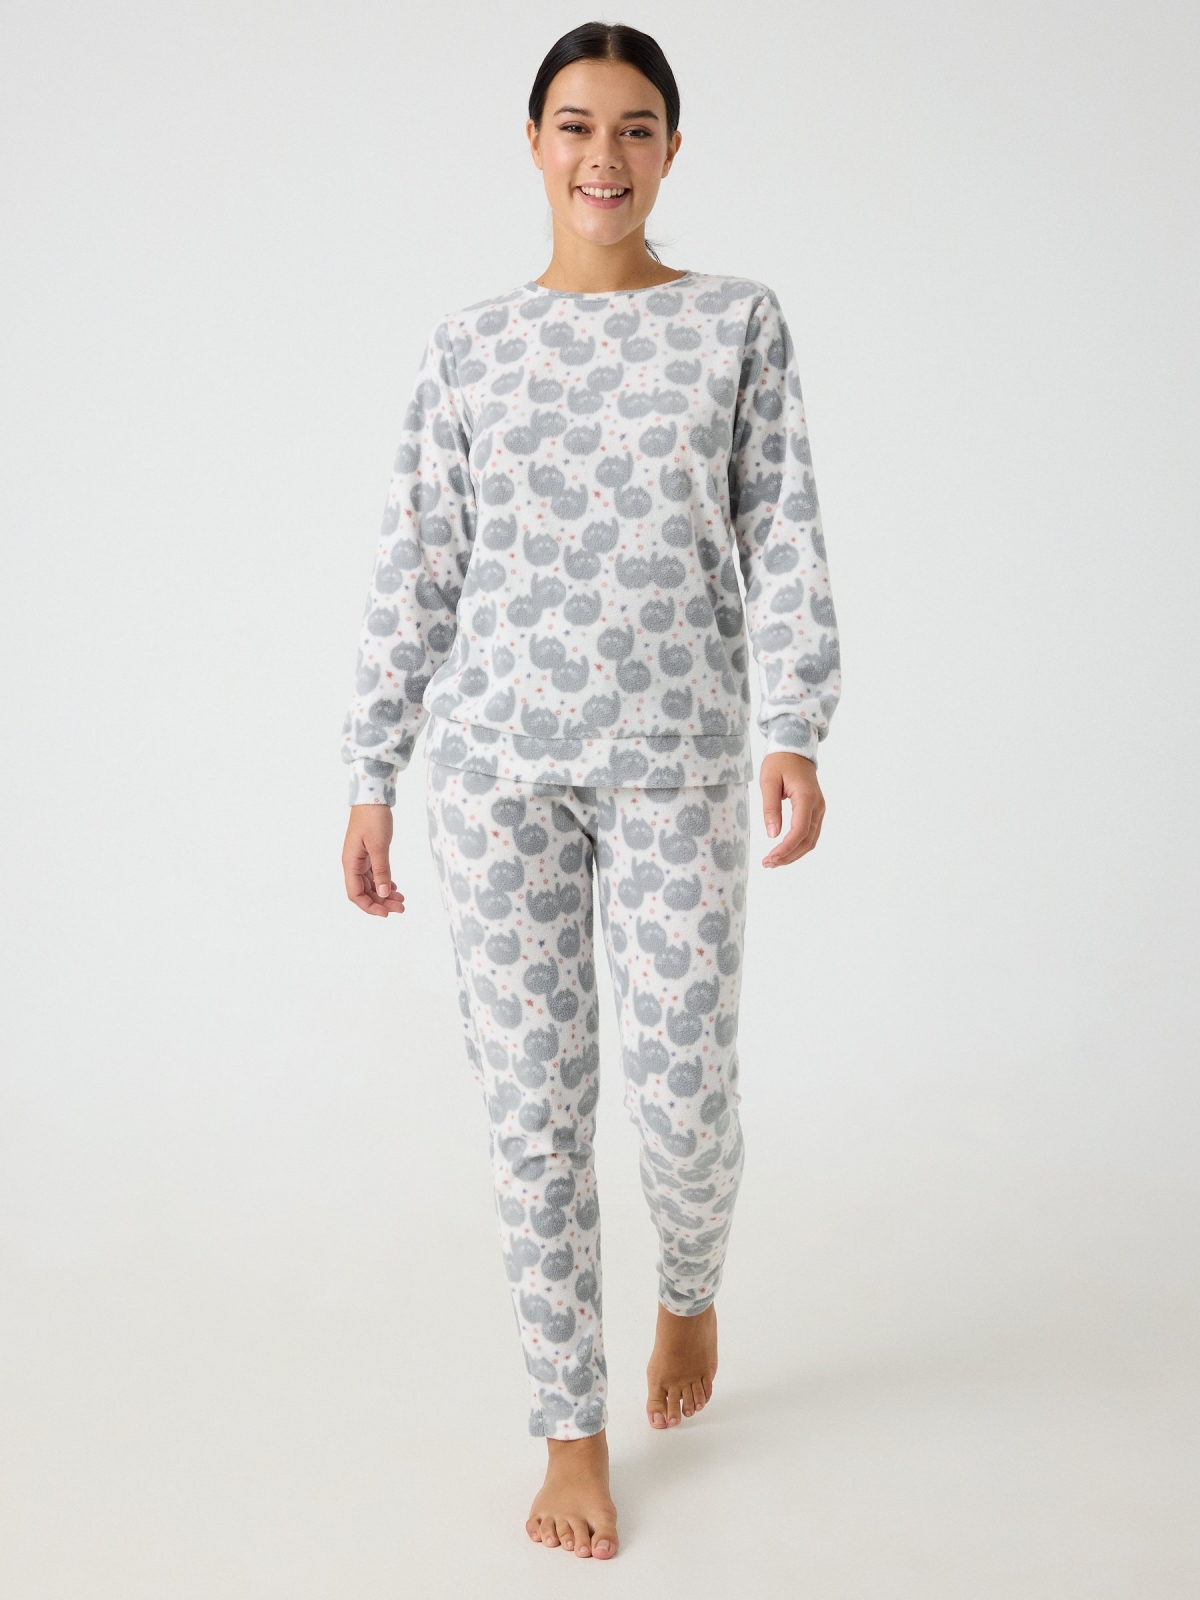 Pijama polar estampado blanco vista media frontal